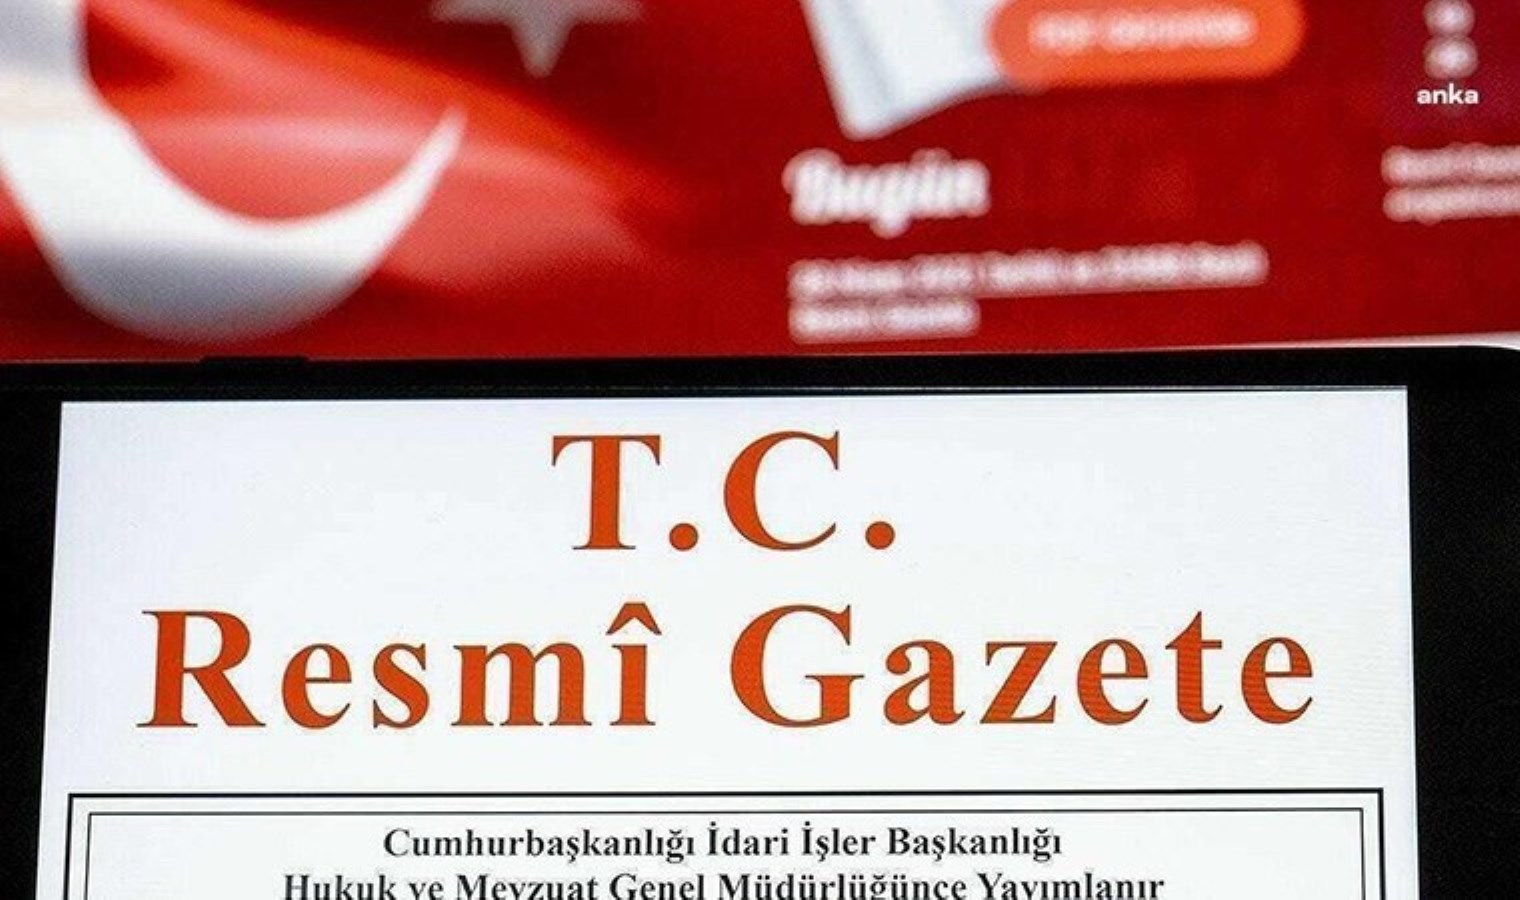 TCMB’nin faaliyet izni kararları Resmi Gazete’de